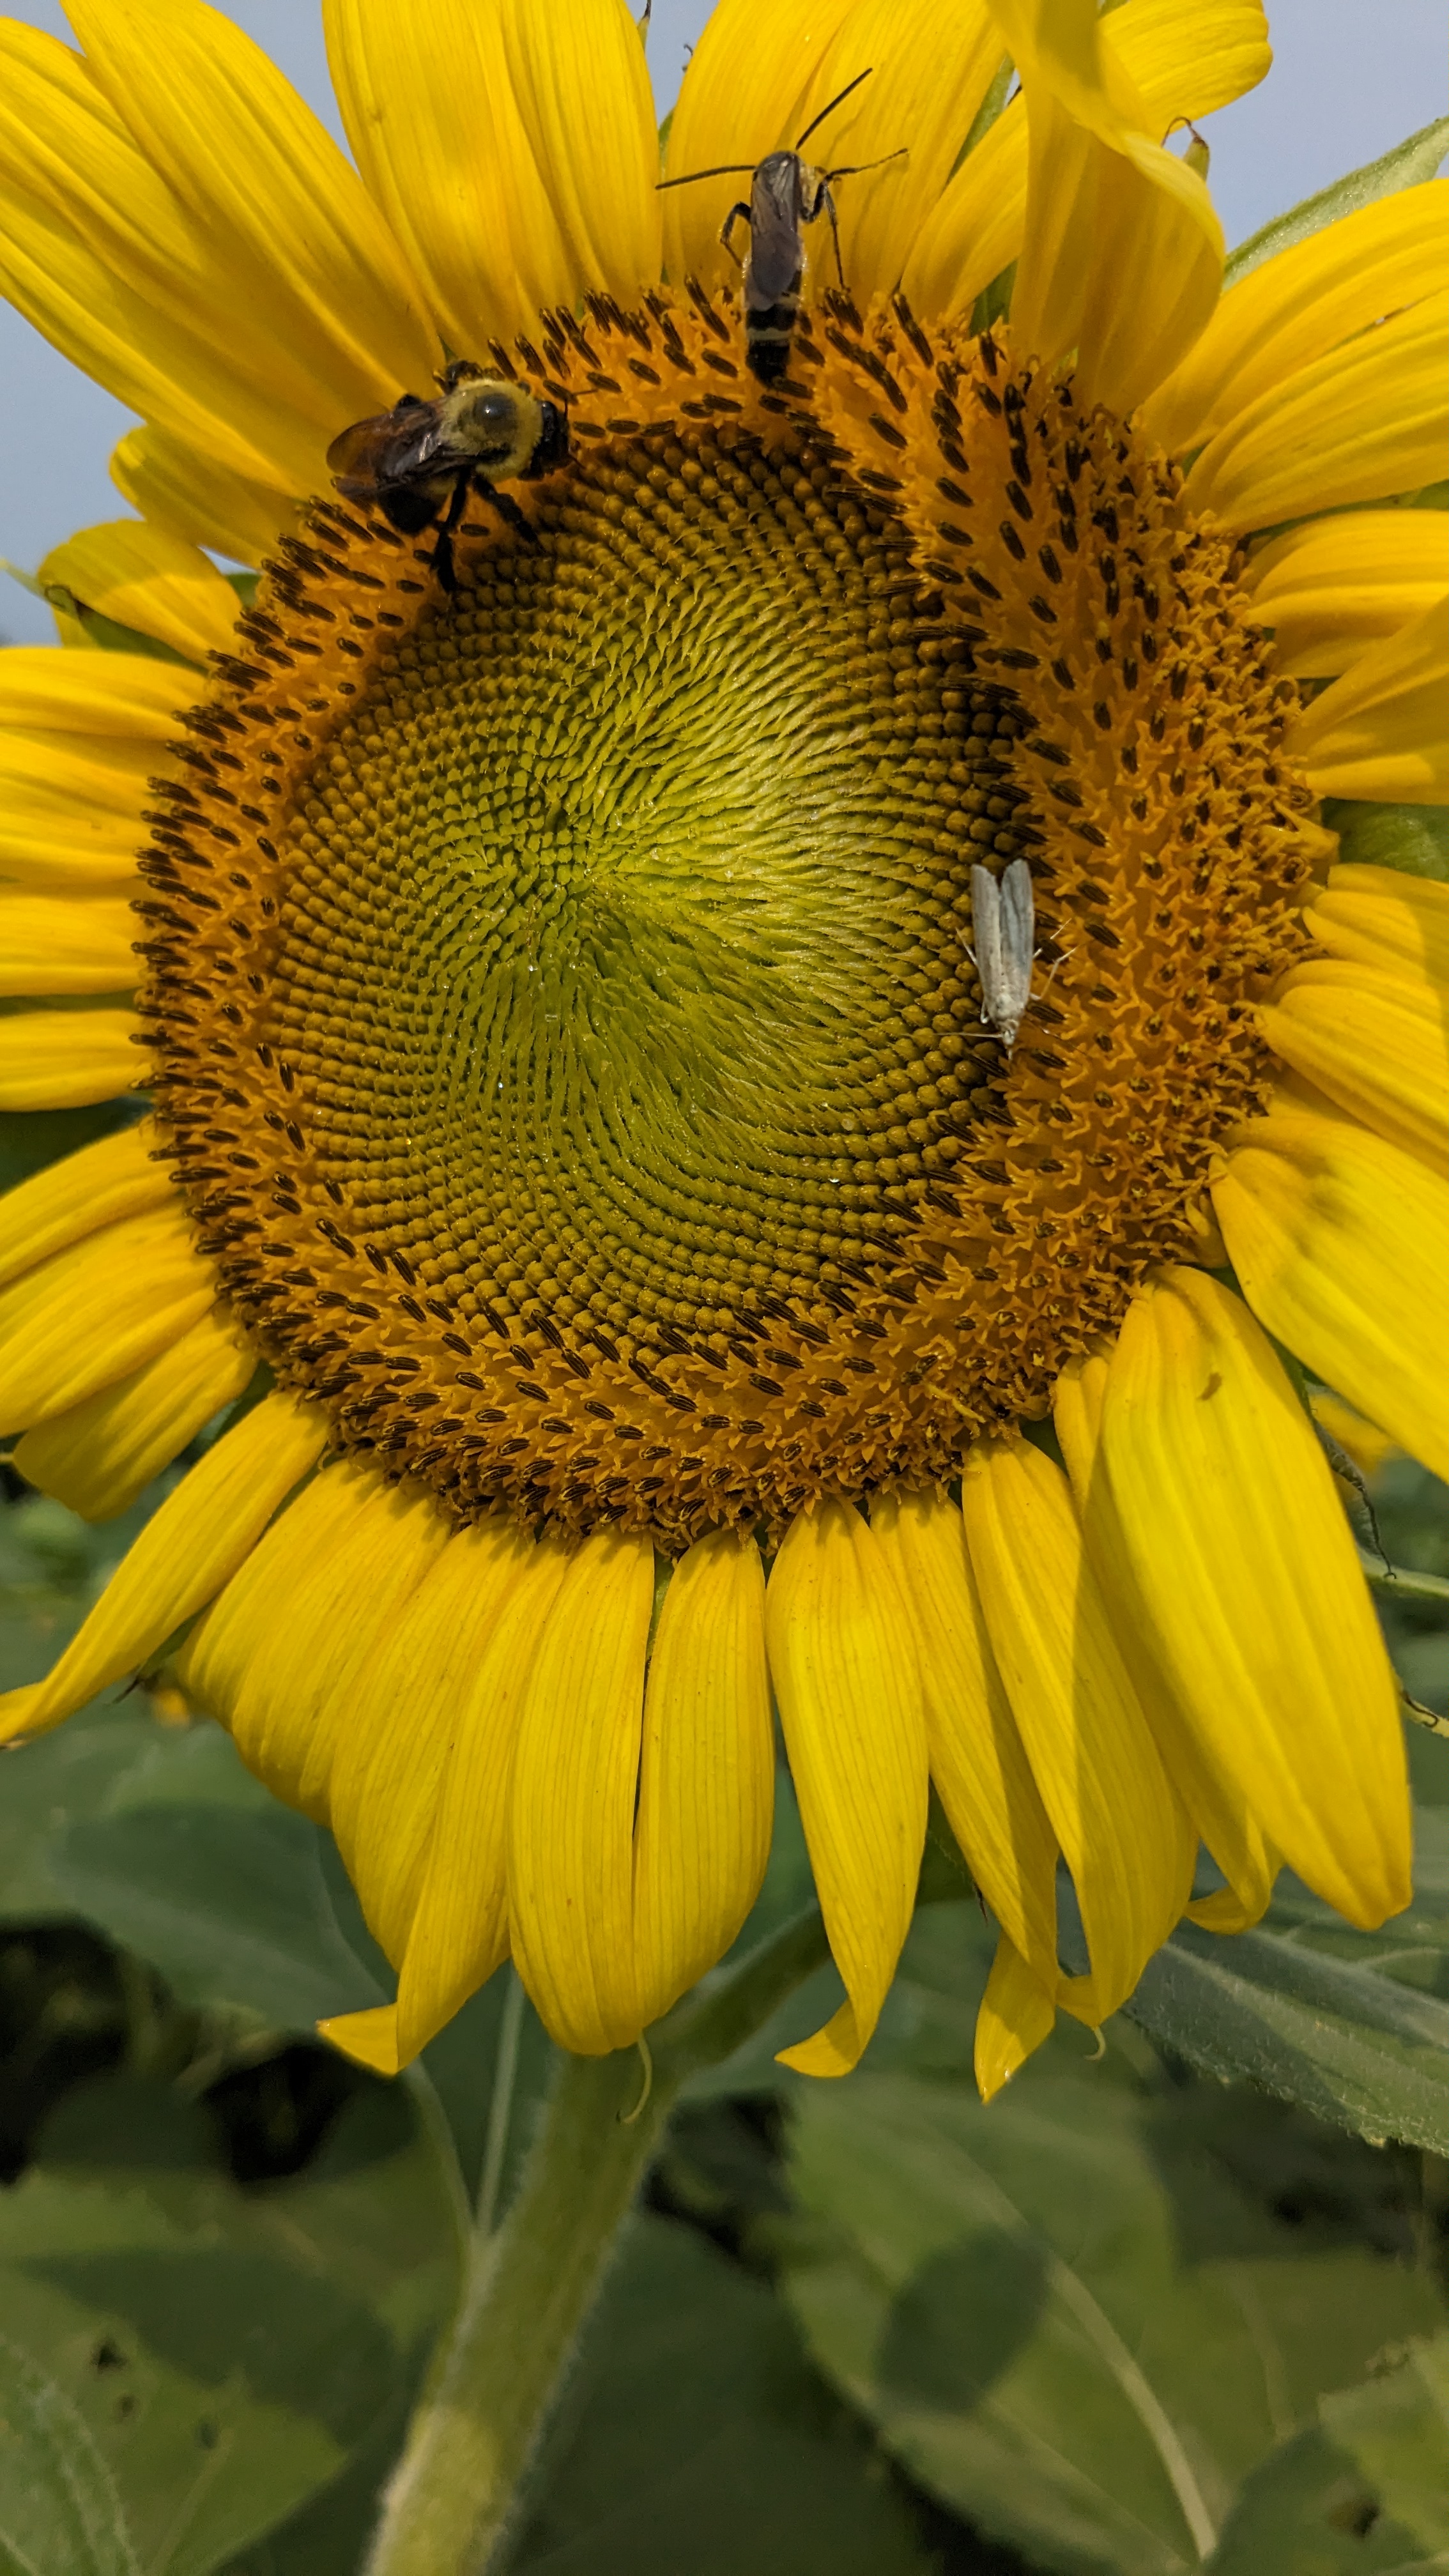 Pollinators on a sunflower.